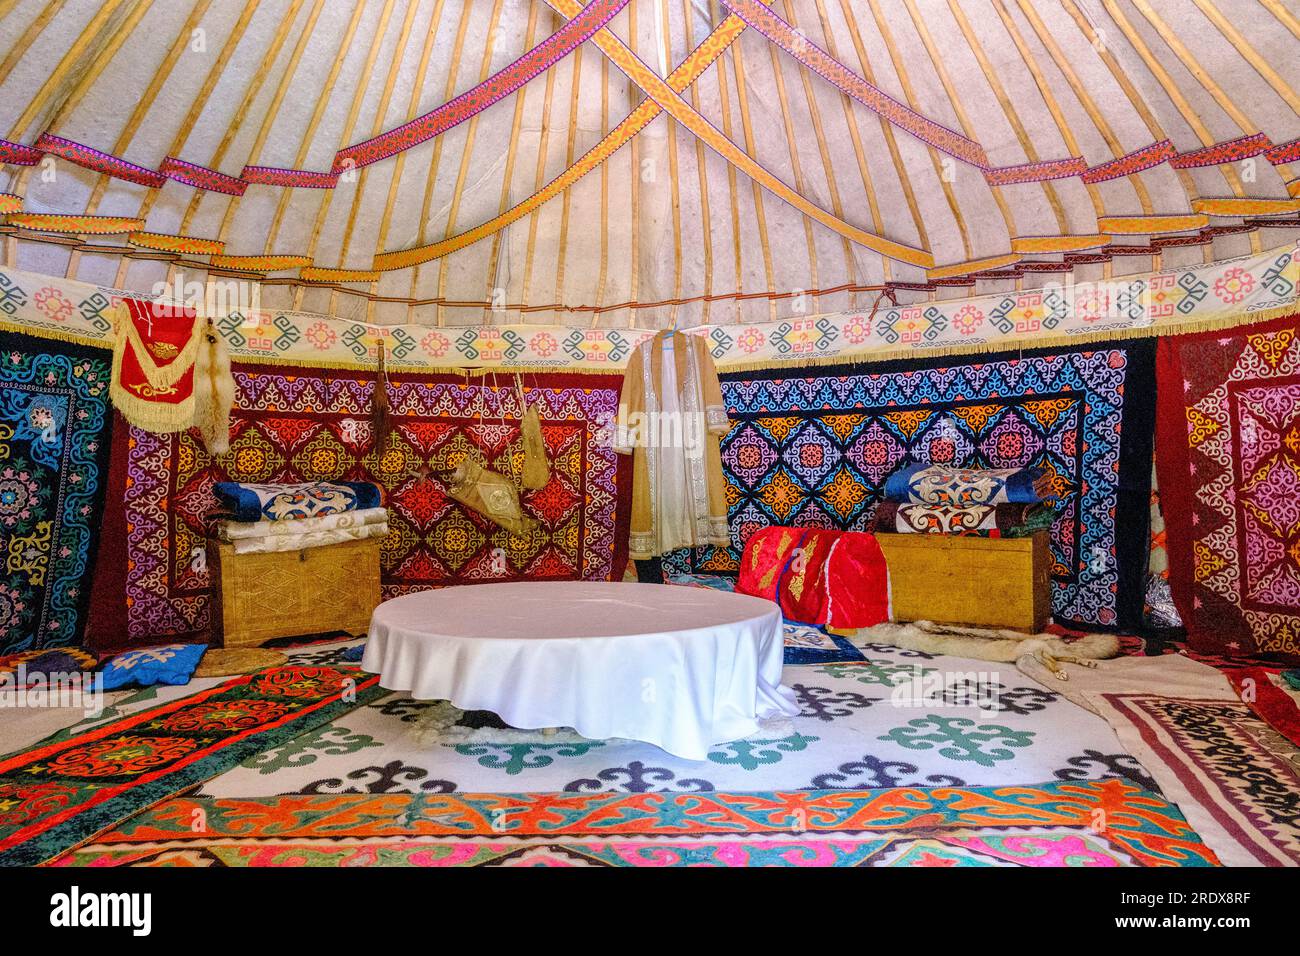 Kazakhstan, Huns Ethno Village. Yurt Interior Showing Floral and Geometric Fabric Decorations. Stock Photo